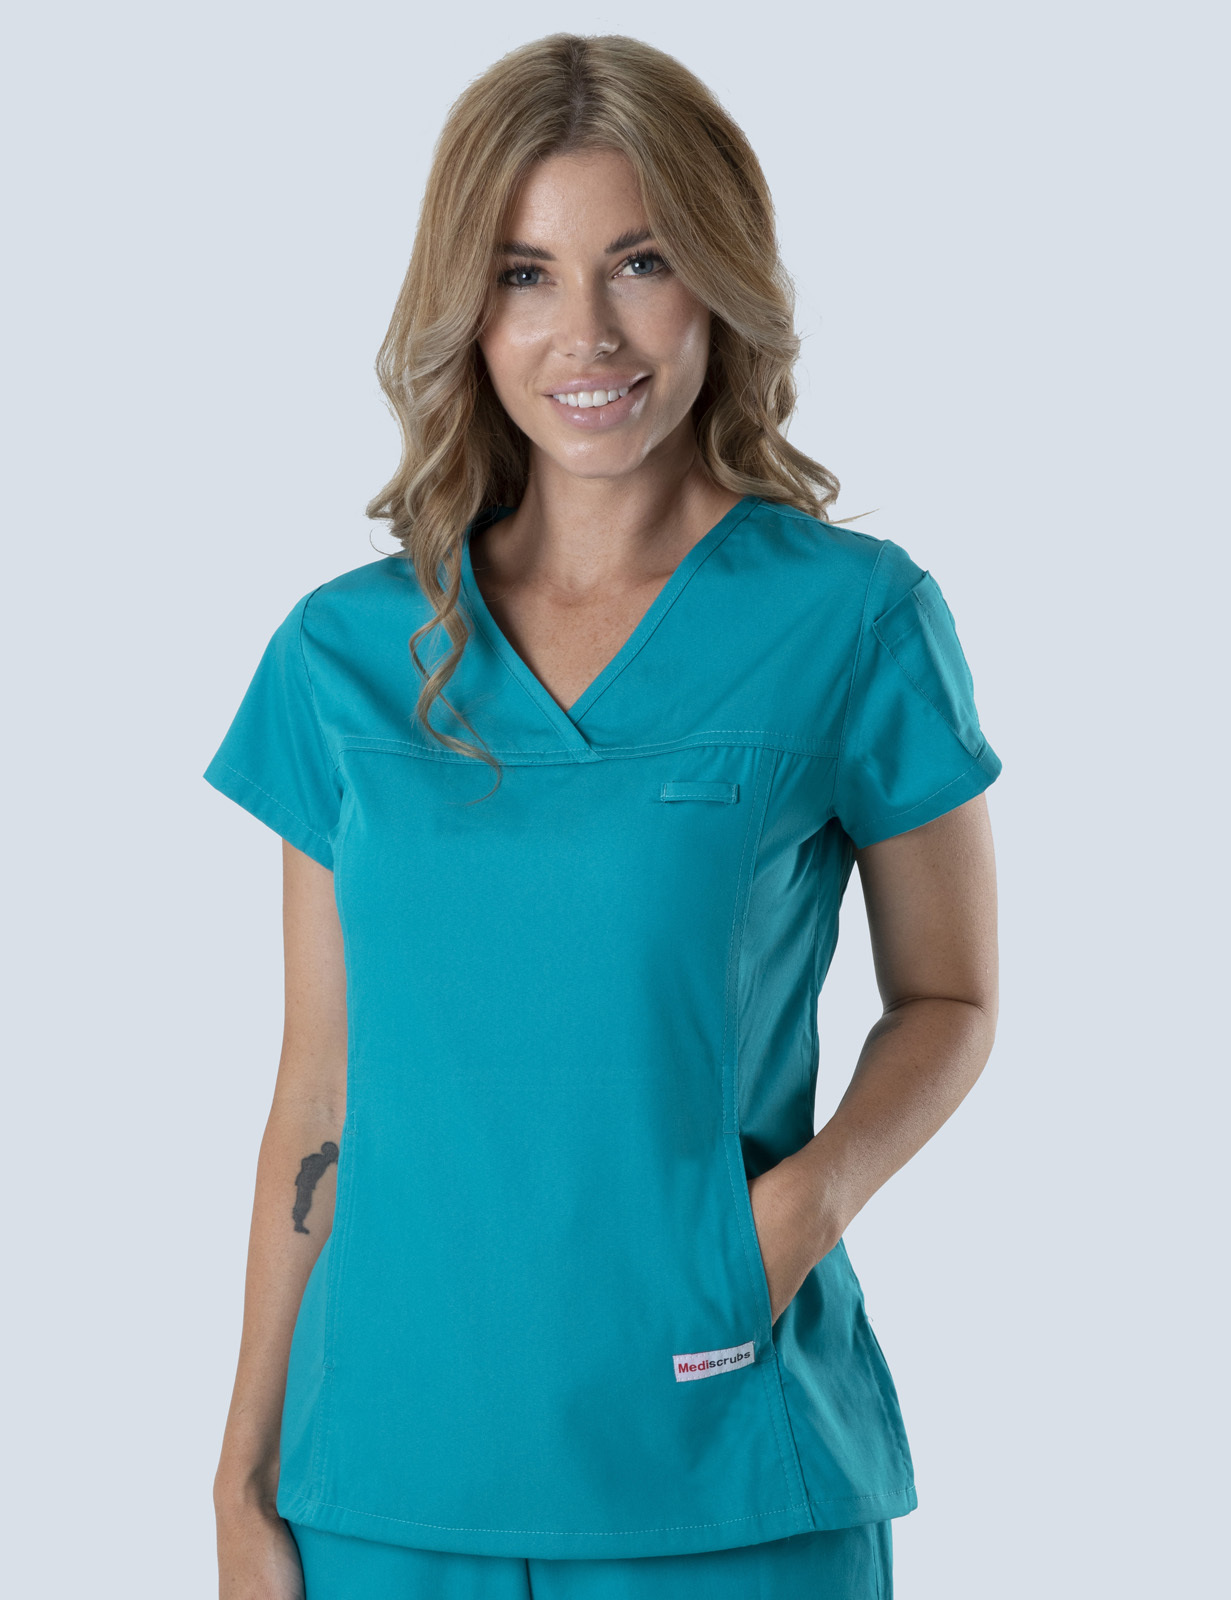 Flinders Medical Centre - Endorsed Nurse (Women's Fit Solid Scrub Top in Teal incl Logos)